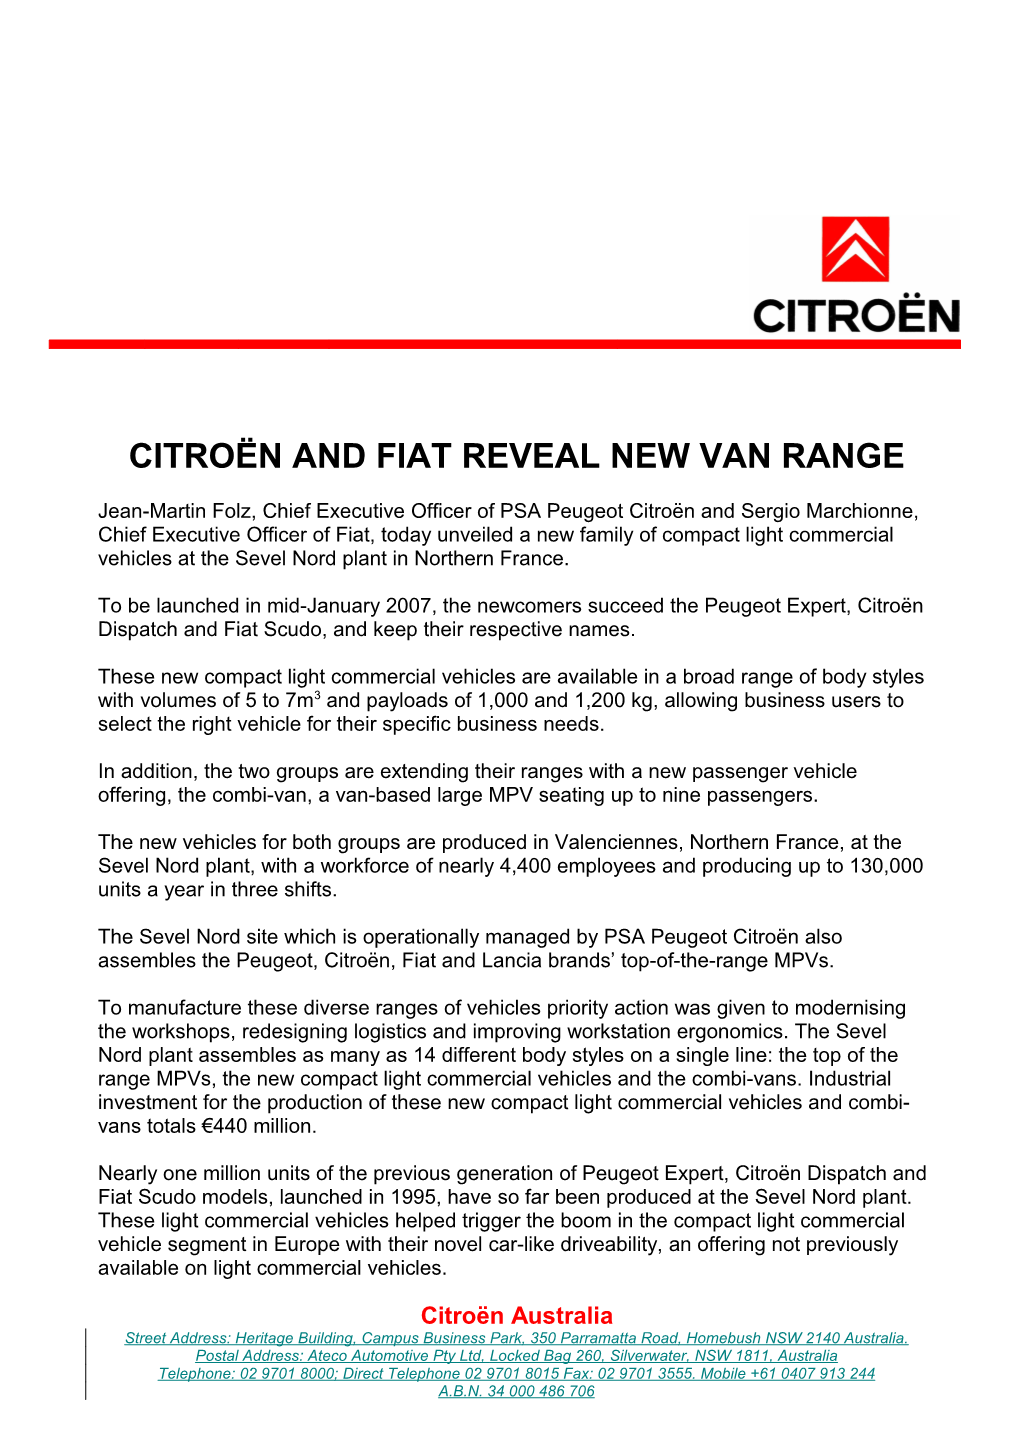 Citroën and Fiat Reveal New Van Range